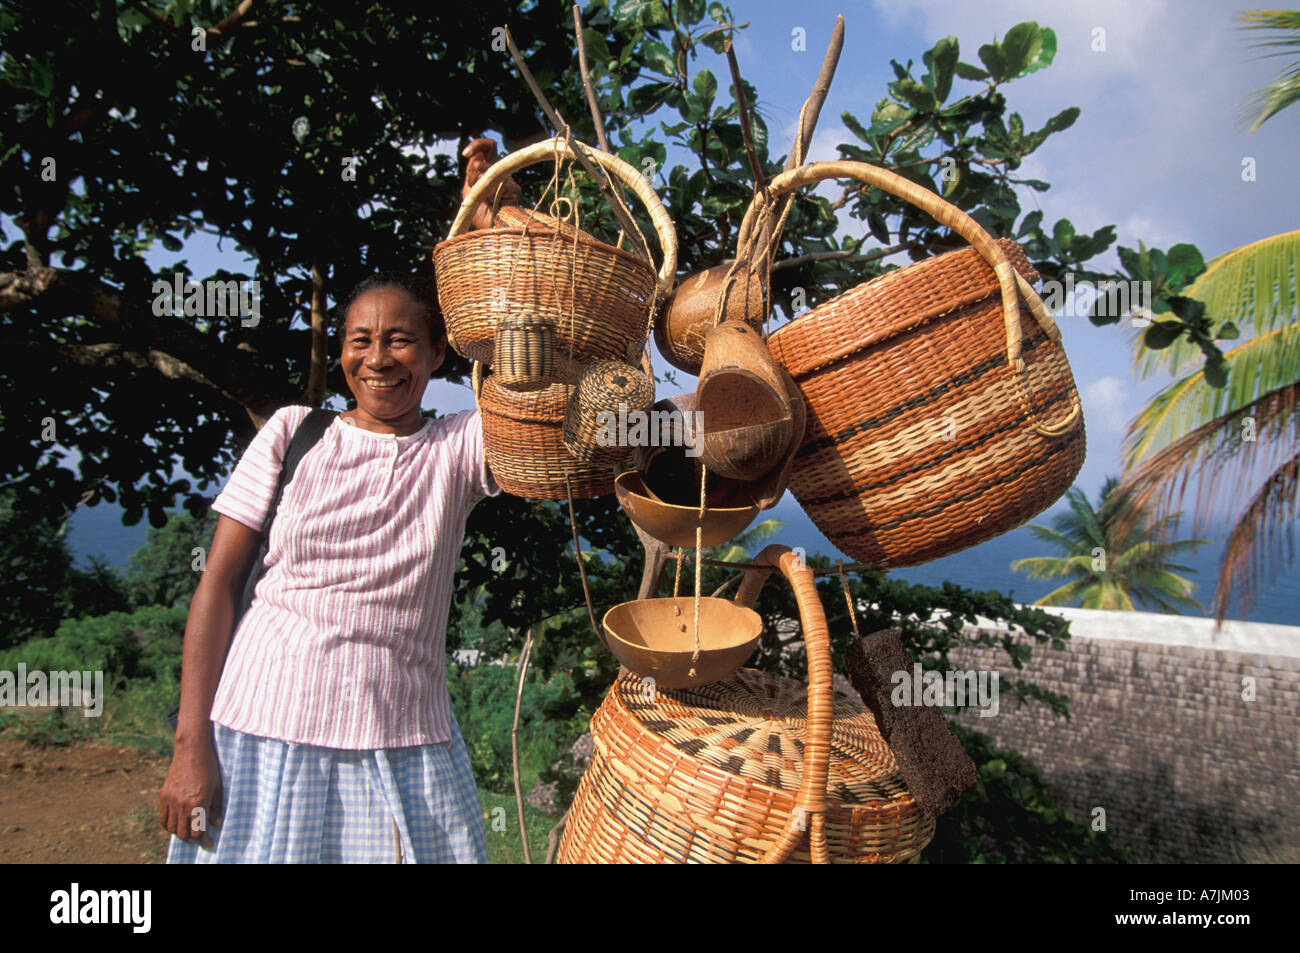 Dominica West Indies Caribbean Carib Territory Reserve Woman Selling Carib Baskets Stock Photo